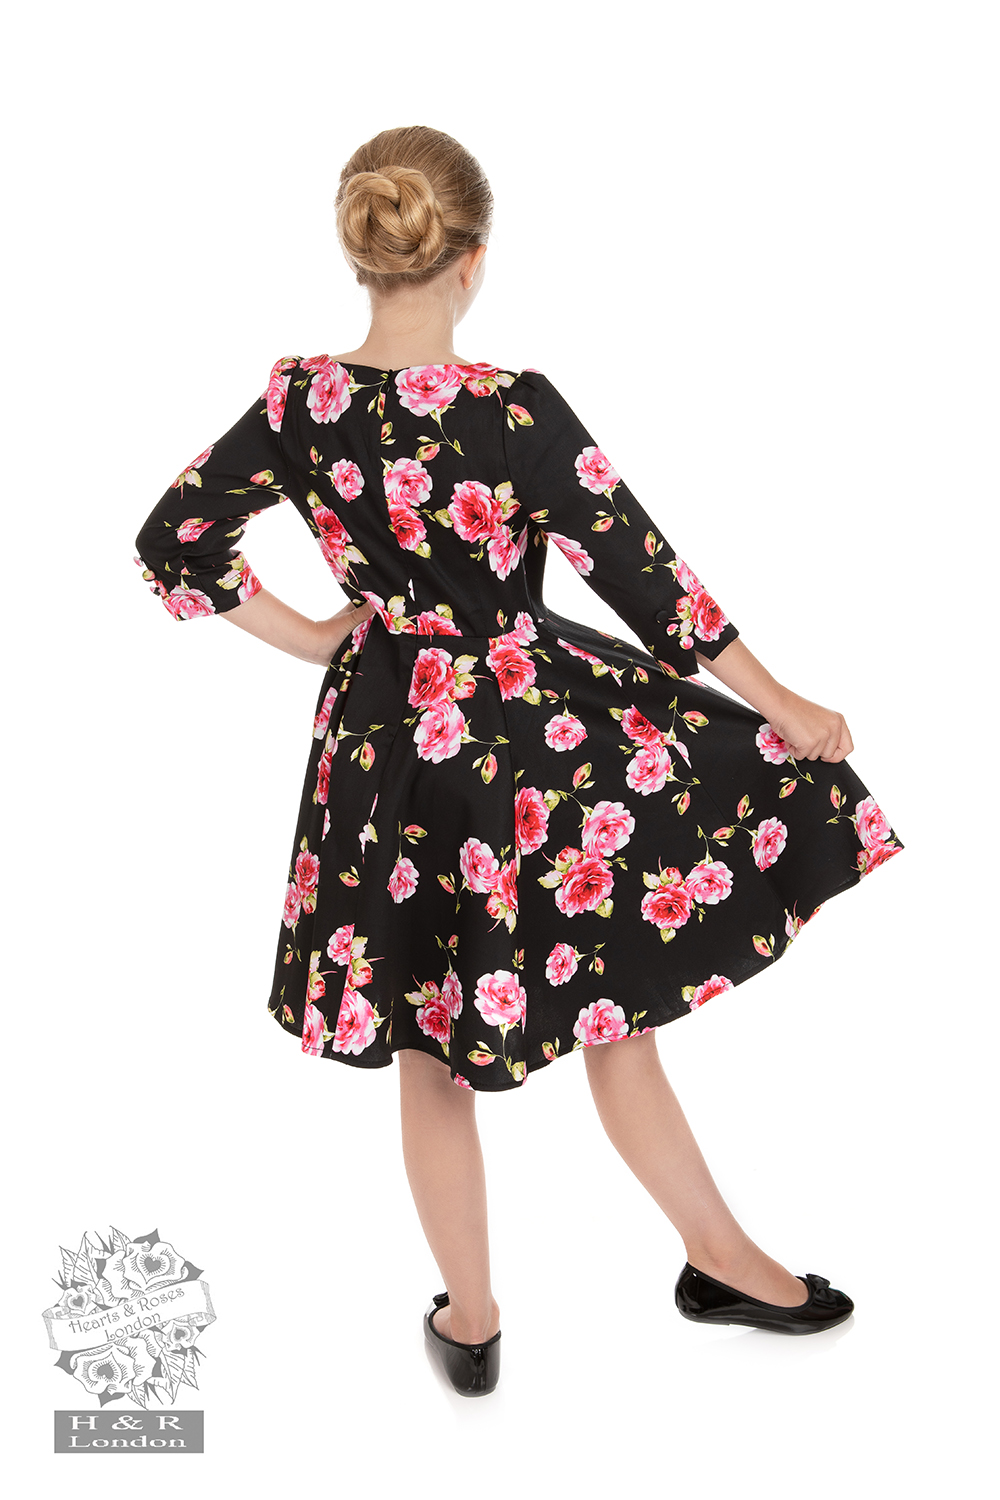 Girls Ava Floral Swing Dress